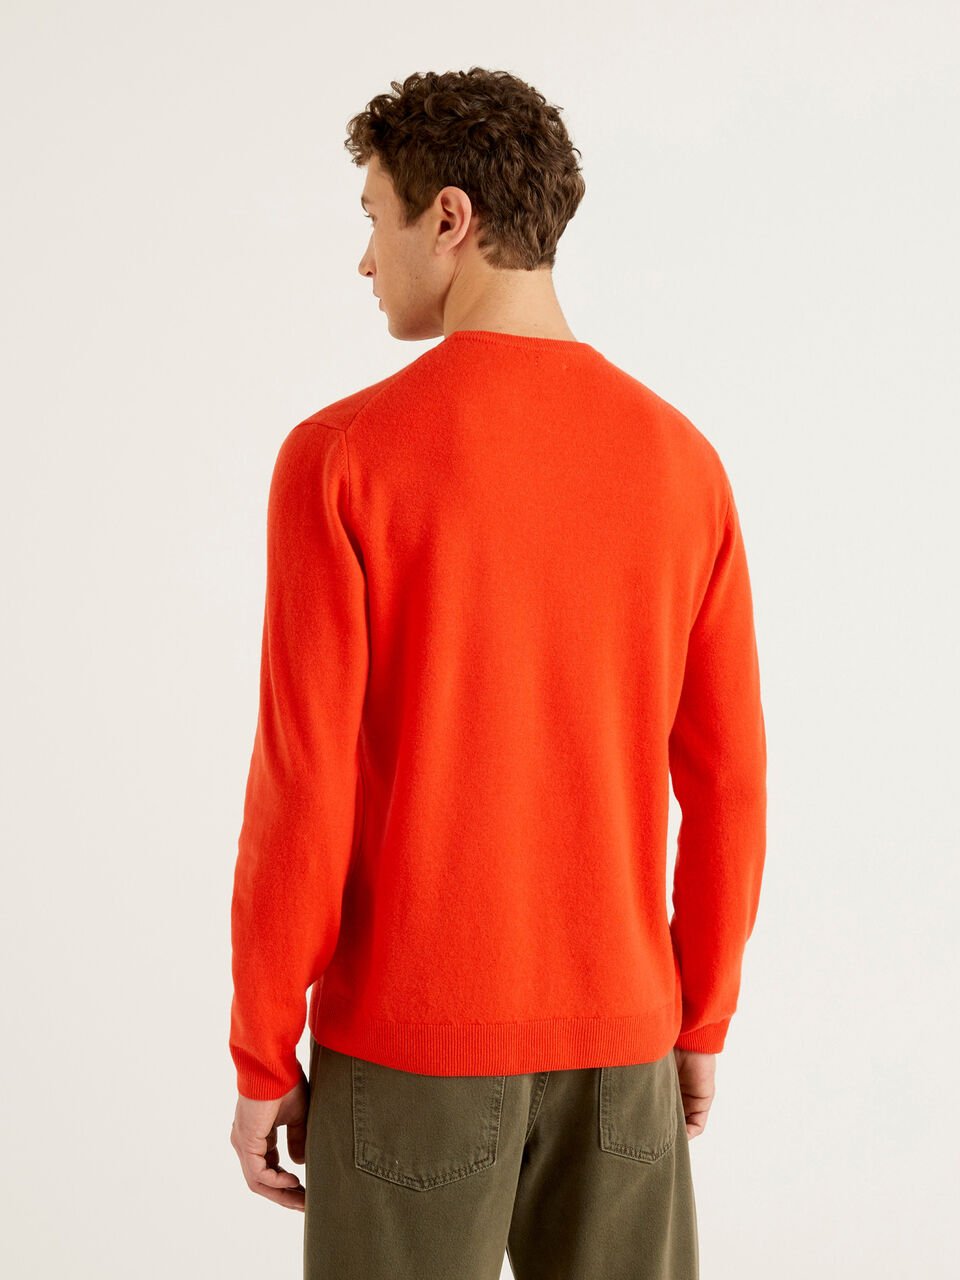 Crew Neck Sweater in Tiger Burnt Orange — C.D. Rigden & Son